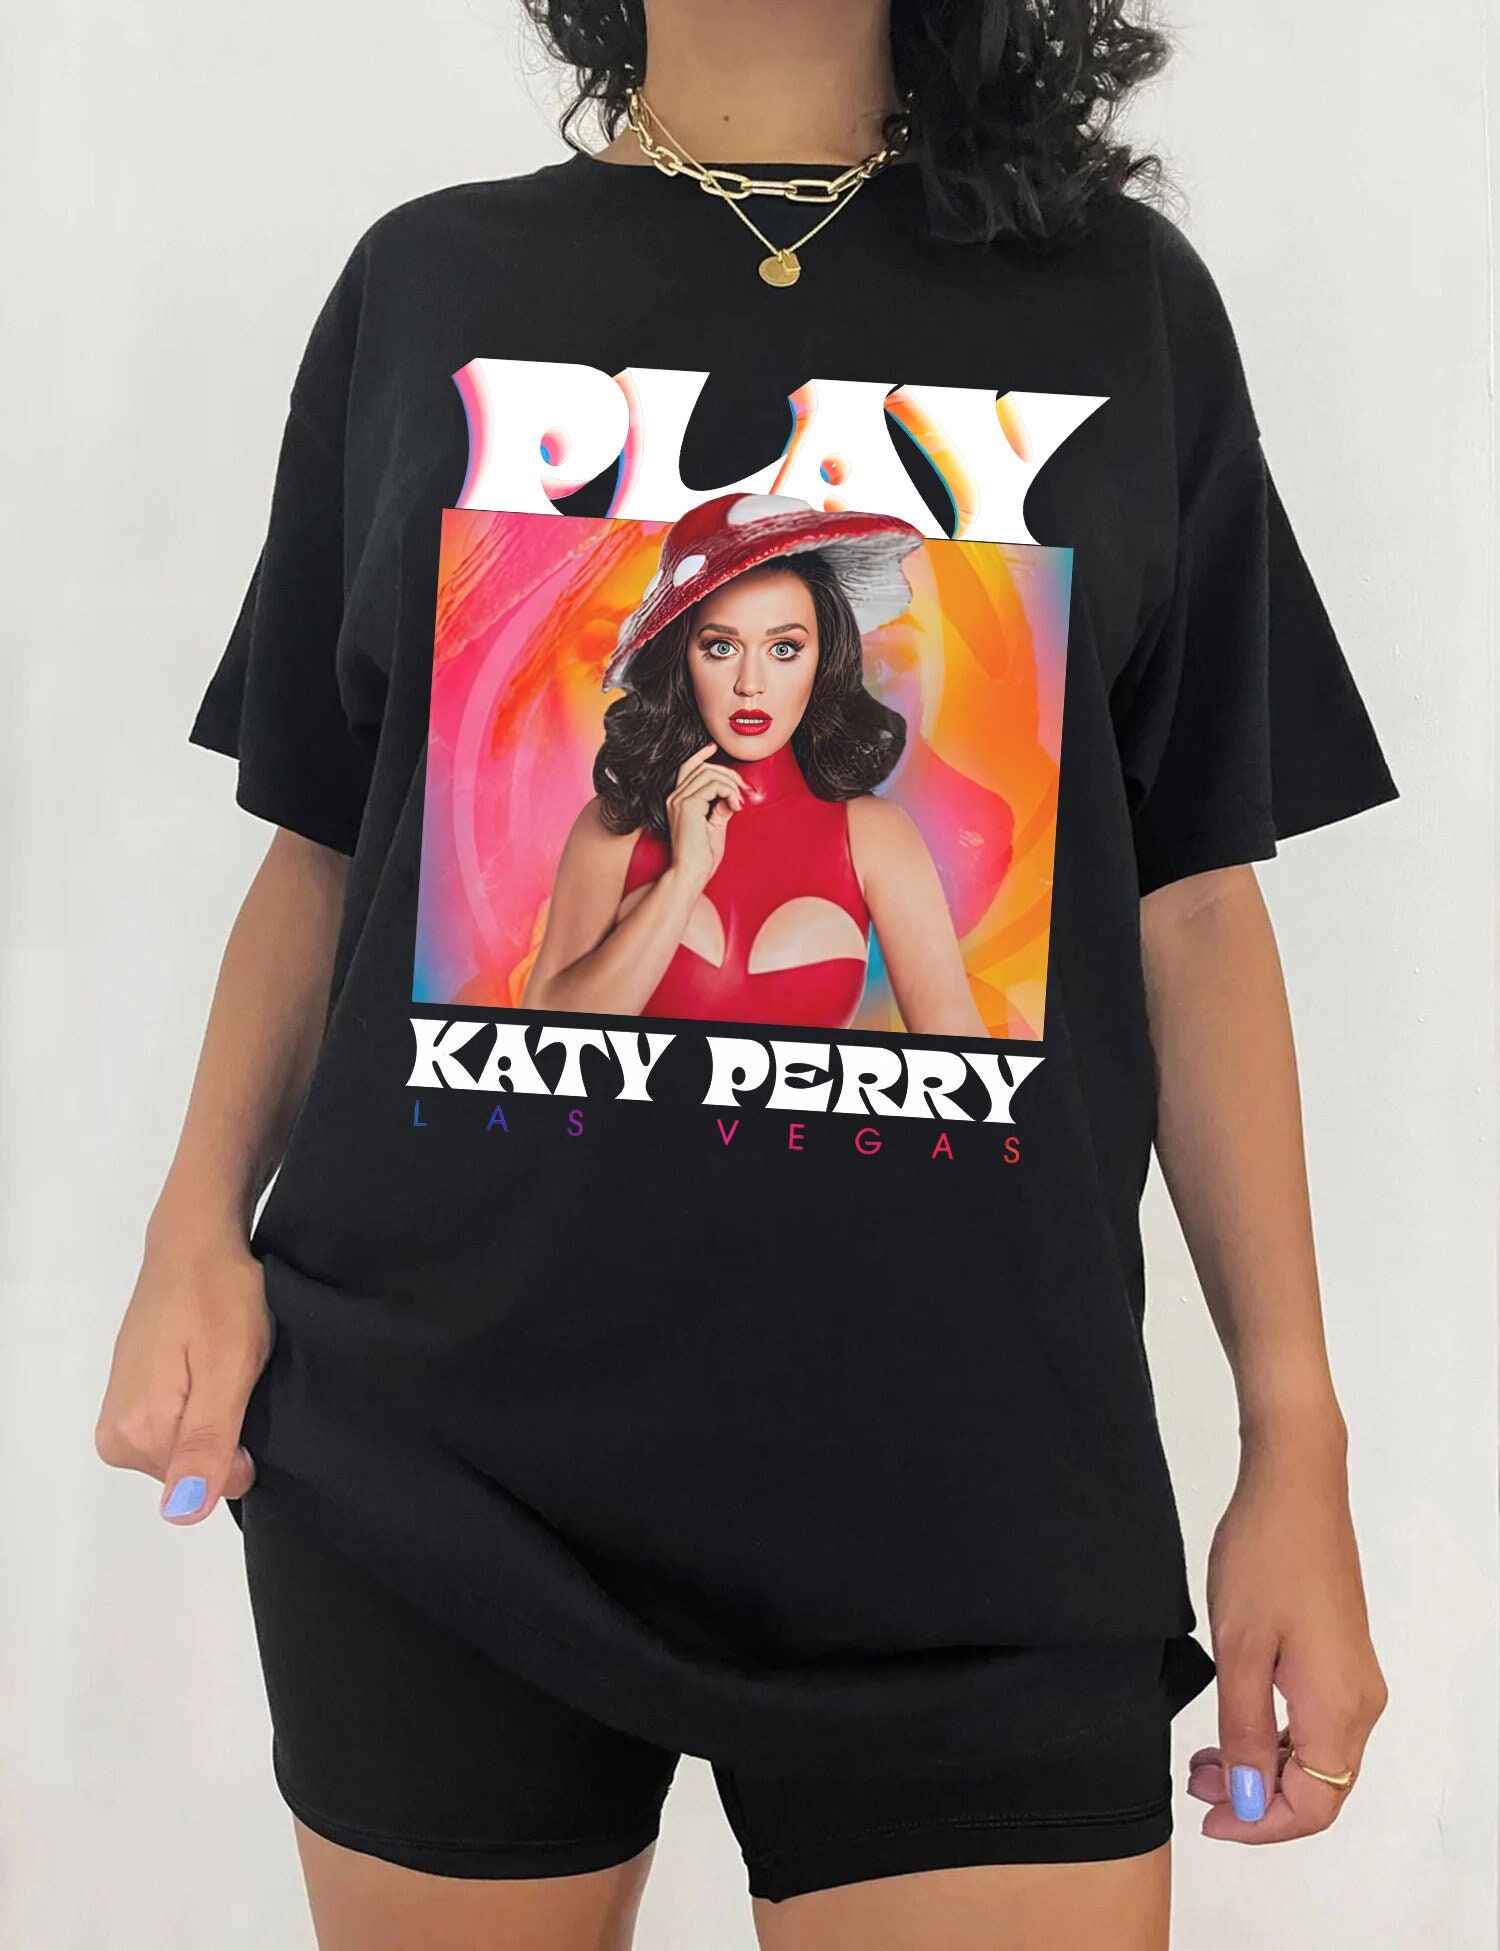 Katy Perry Play Las Vegas Shirt, Katy Perry Concert Tee